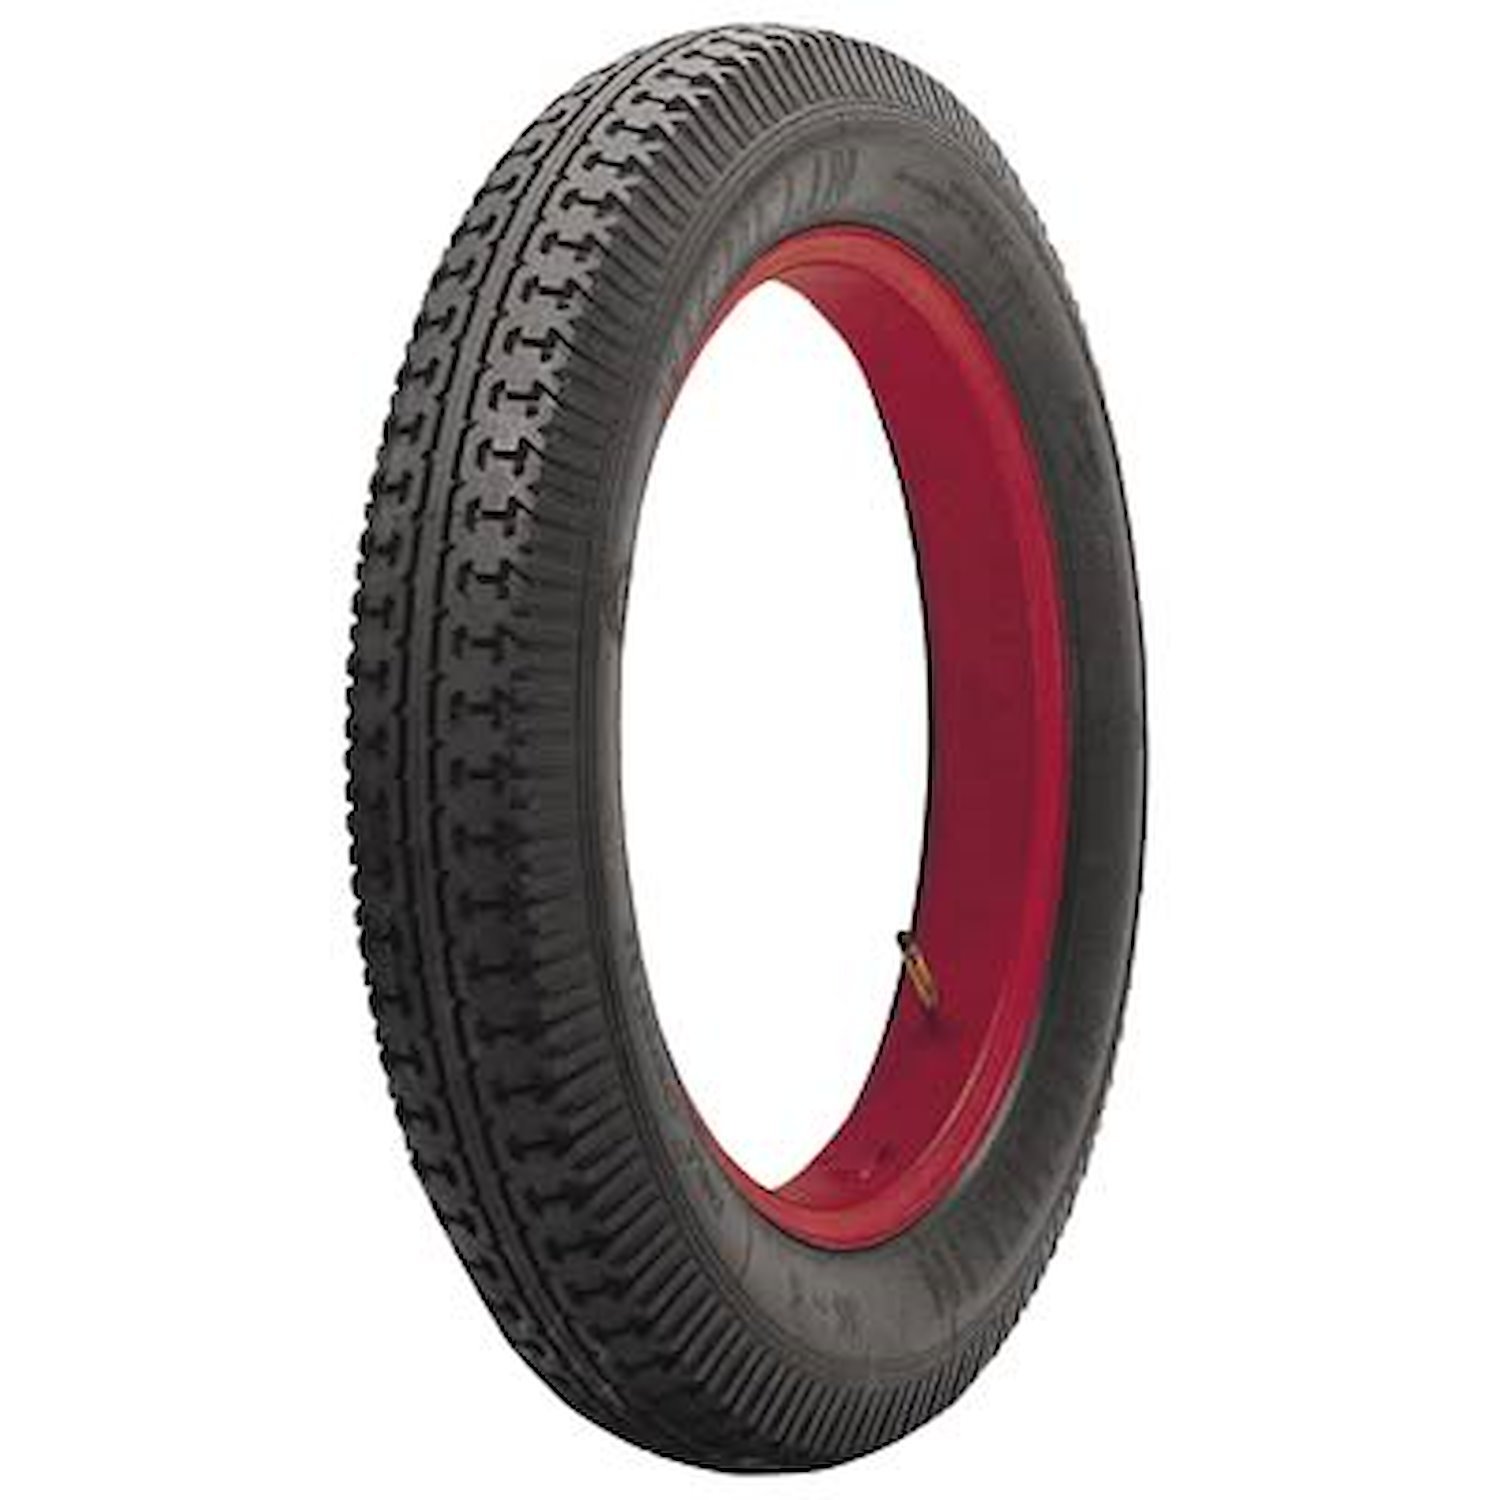 77210 Tire, Michelin Double Rivet, 650/700-20